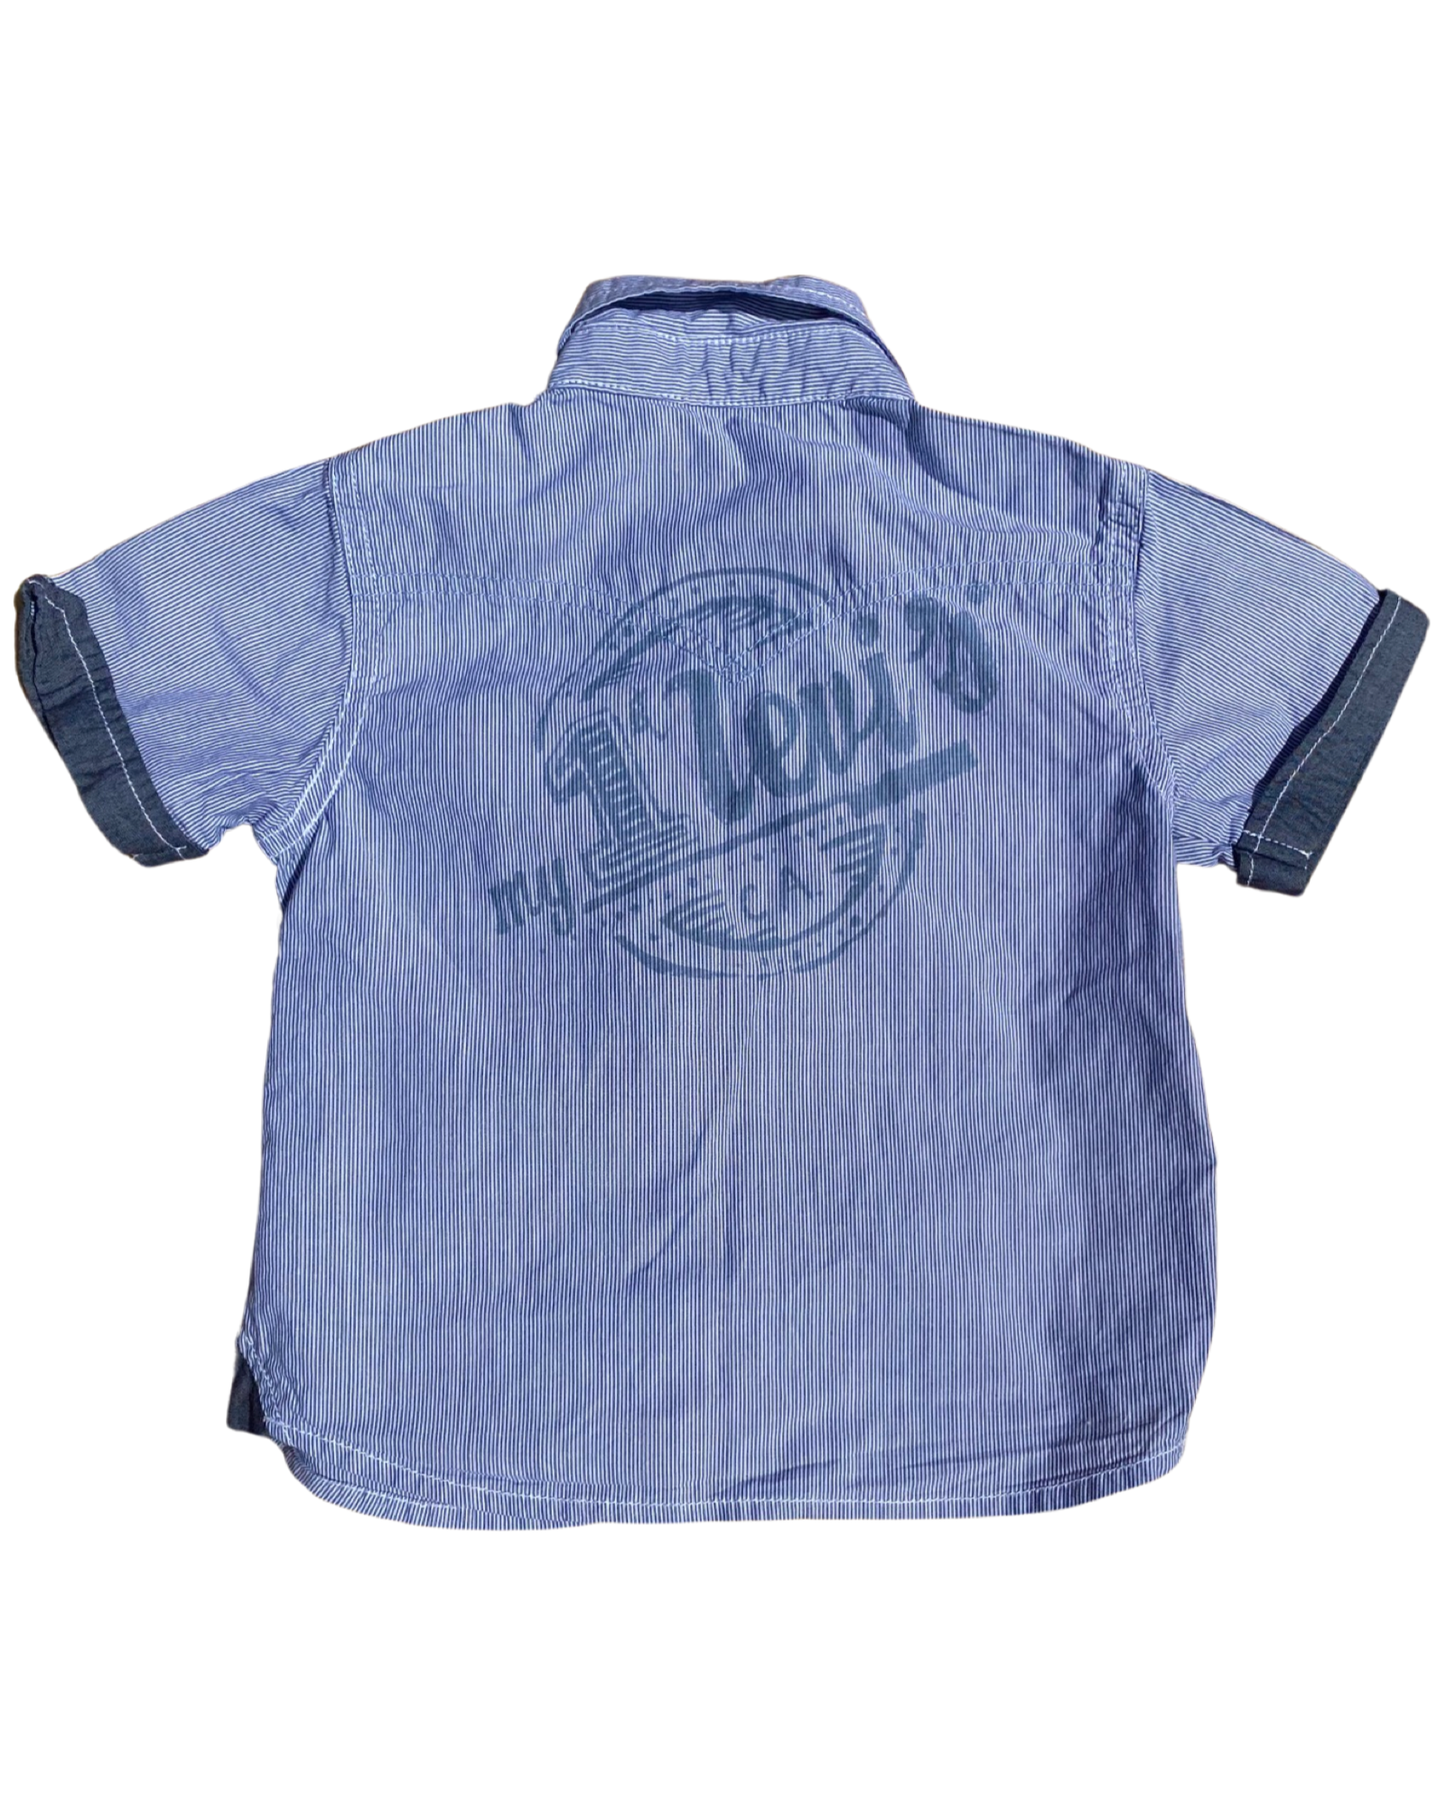 Levi's vintage blue striped short sleeve shirt (size 12-18mths)